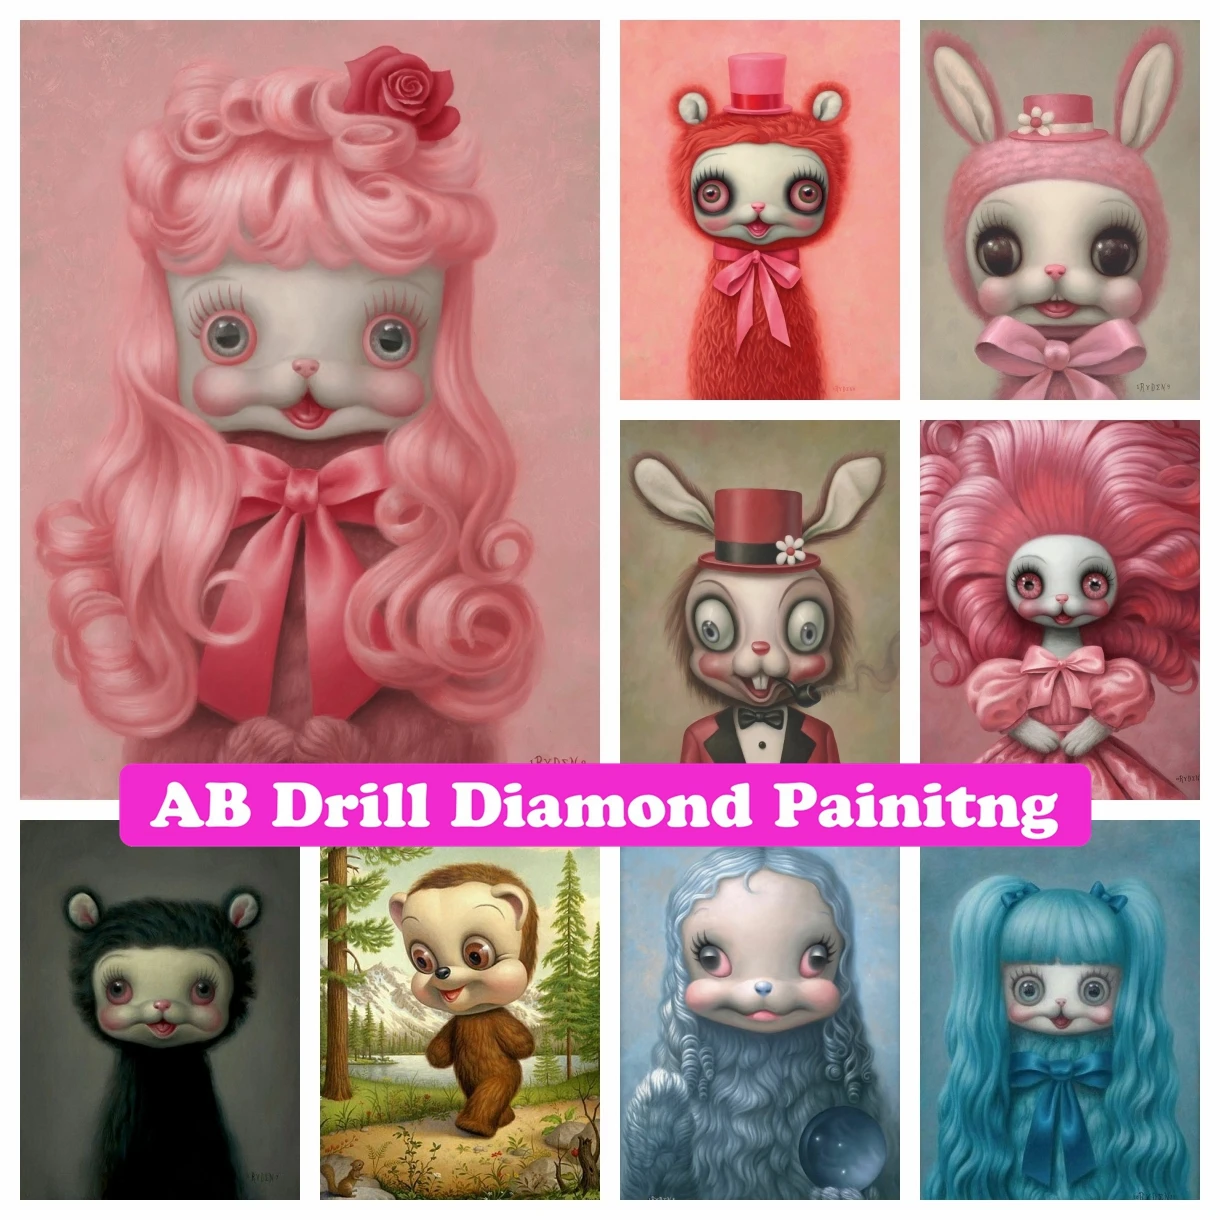 Mark Ryden Strange Art Rabbit 5D DIY AB Drills Diamond Painting Mosaic Cartoon Girl Cross Stitch Kits Embroidery Room Decor Gift